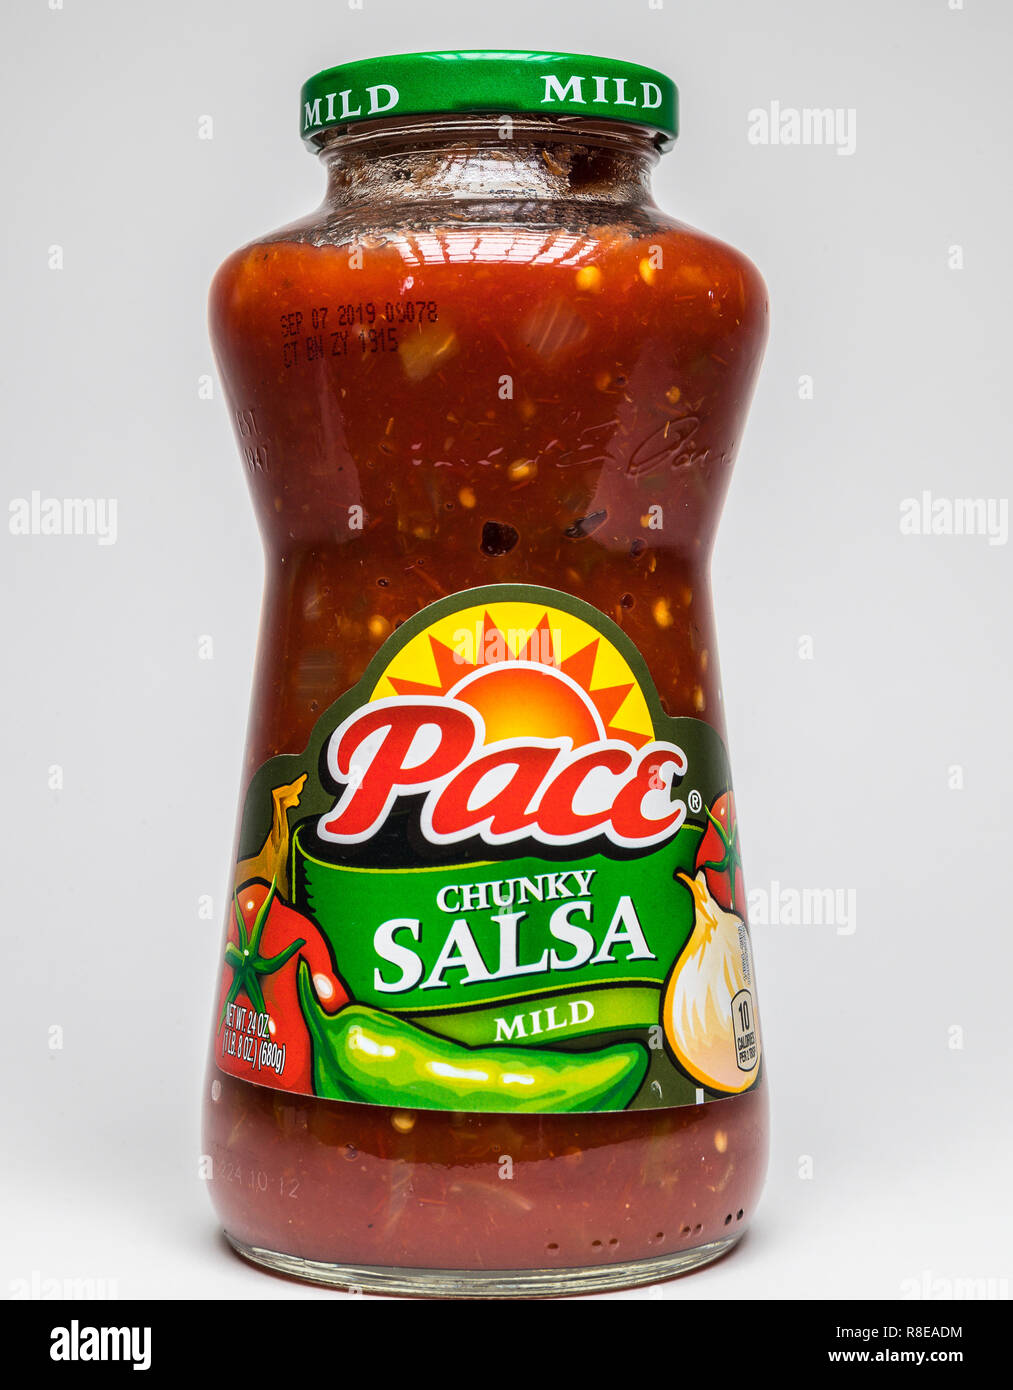 https://c8.alamy.com/comp/R8EADM/jar-of-pace-chunky-salsa-mild-R8EADM.jpg